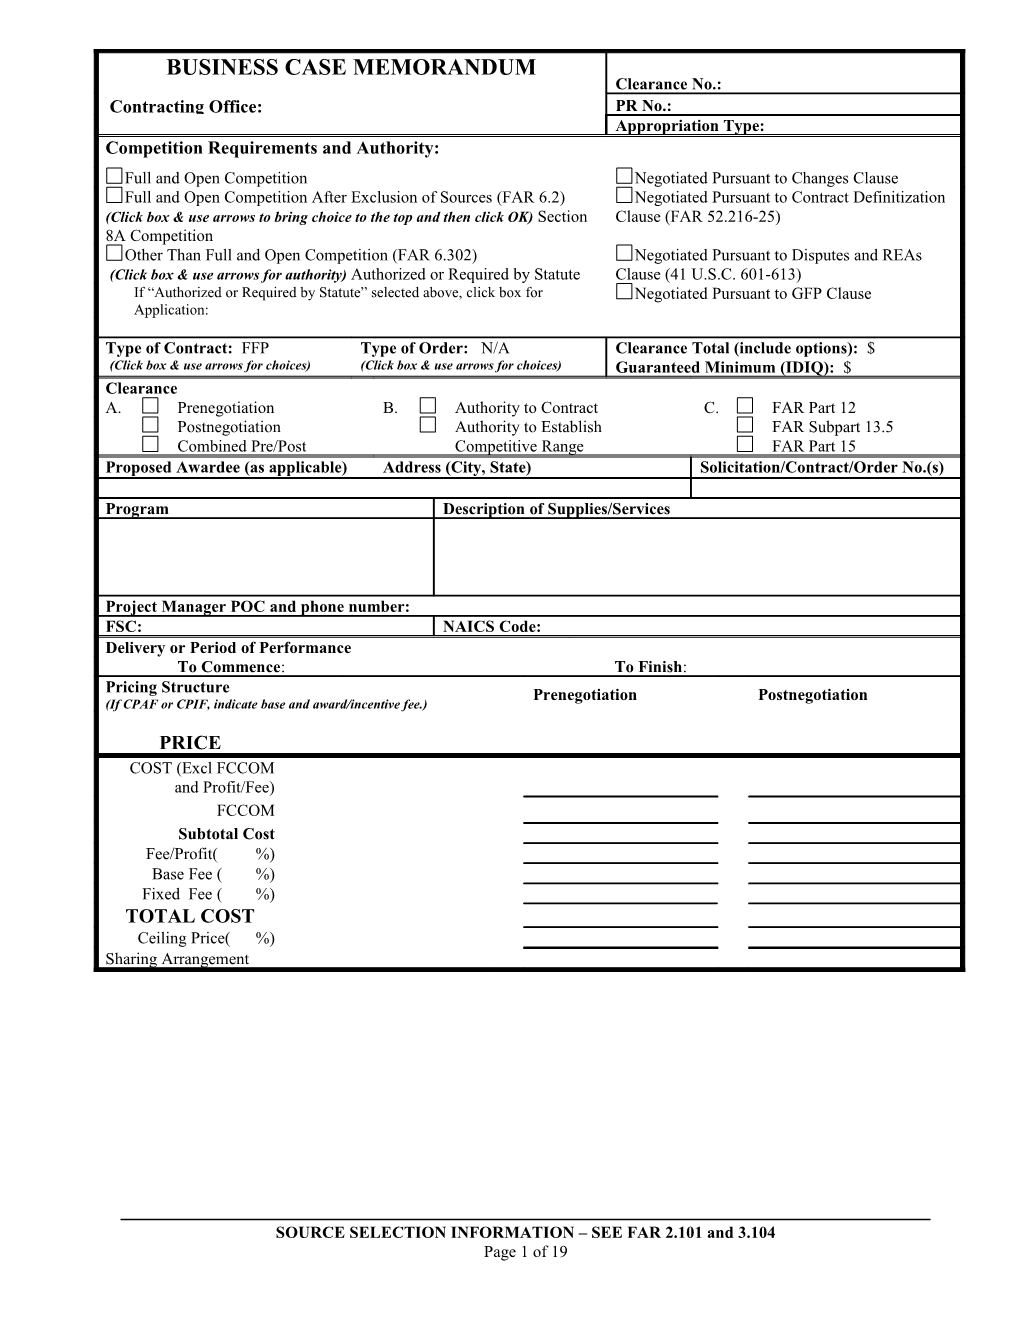 Business Clearance Memorandum Form ( $500K)